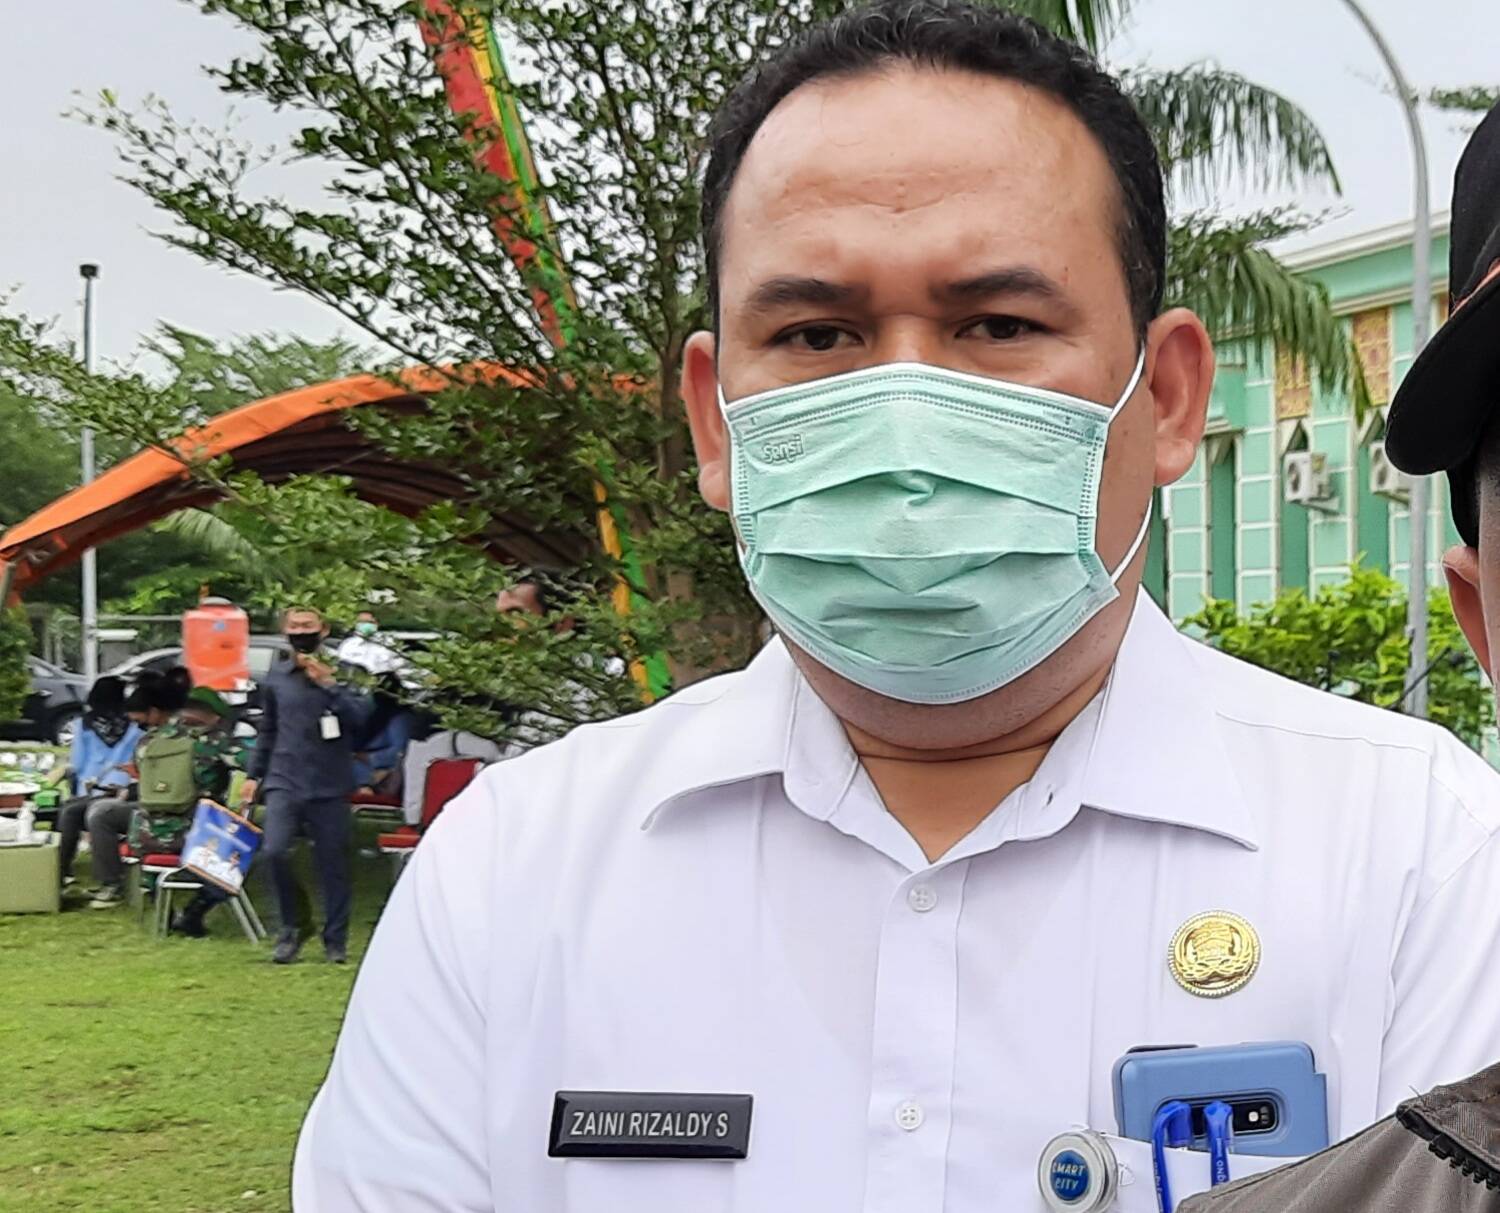 Plh Kadiskes Pekanbaru Ingatkan Petugas Kesehatan Kenakan APD Saat Bertugas